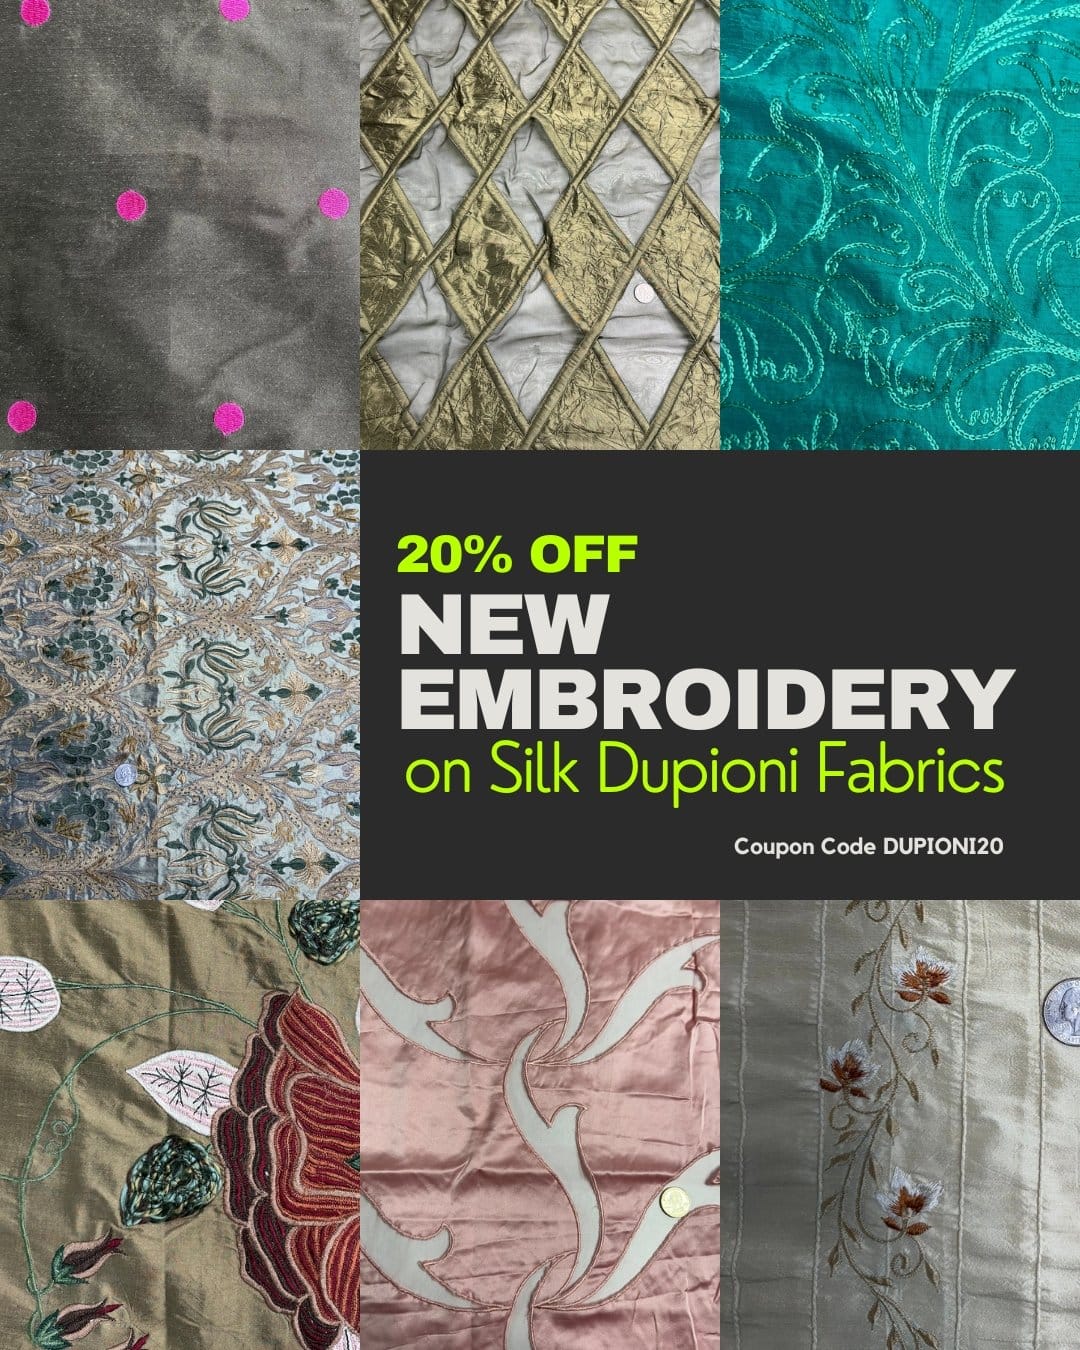 20% off New Embroidery Silk Dupioni Fabrics